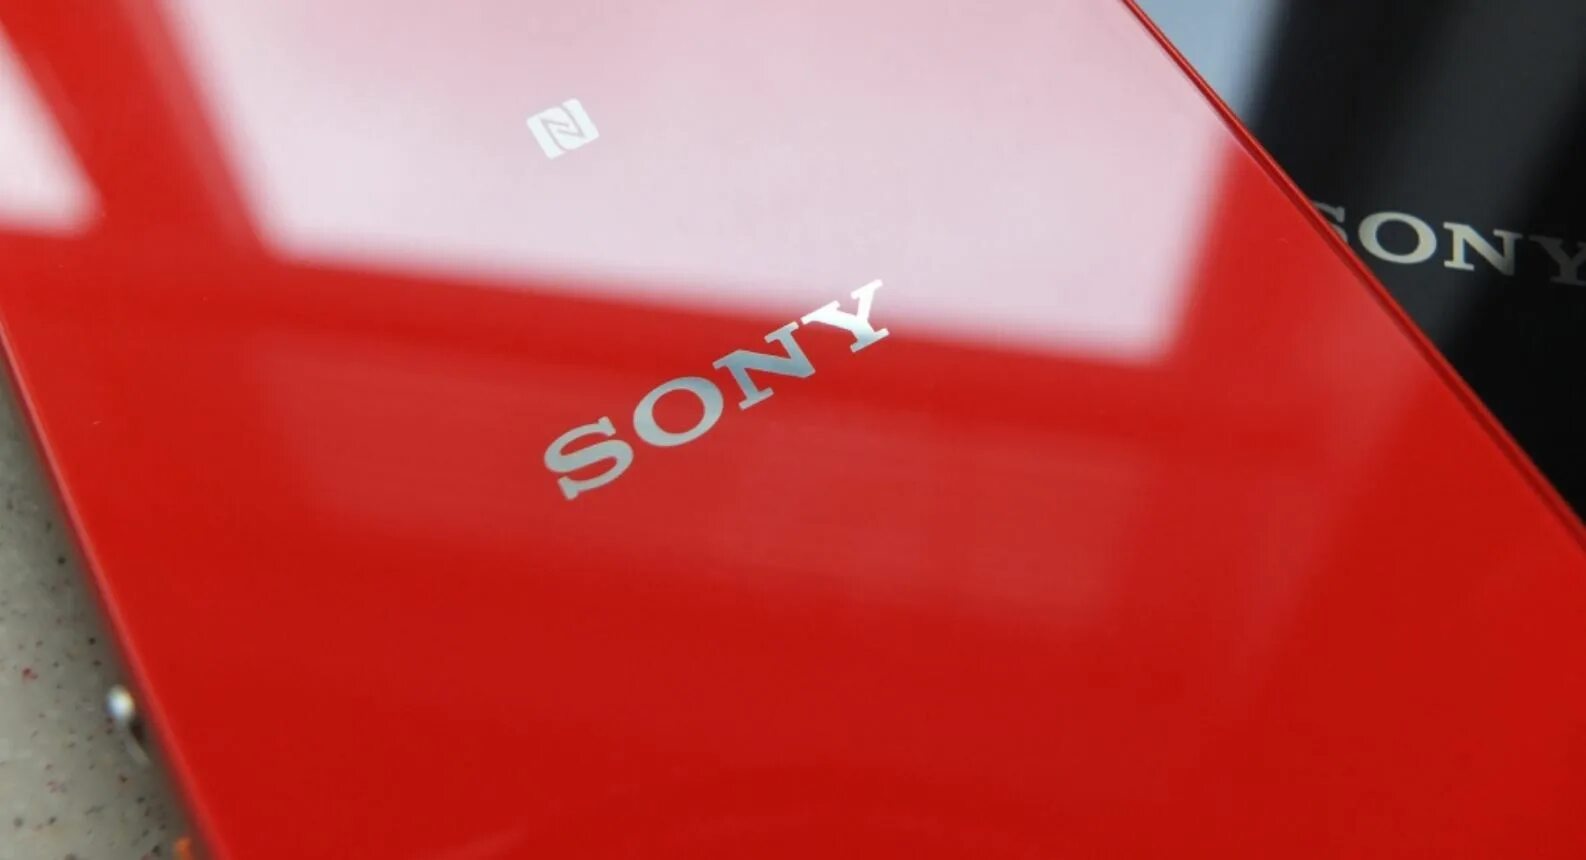 Sony experience z3. Сони экспириенс 3. Sony Xperia z5 красного цвета. Sony z3 Compact шильдик модели.